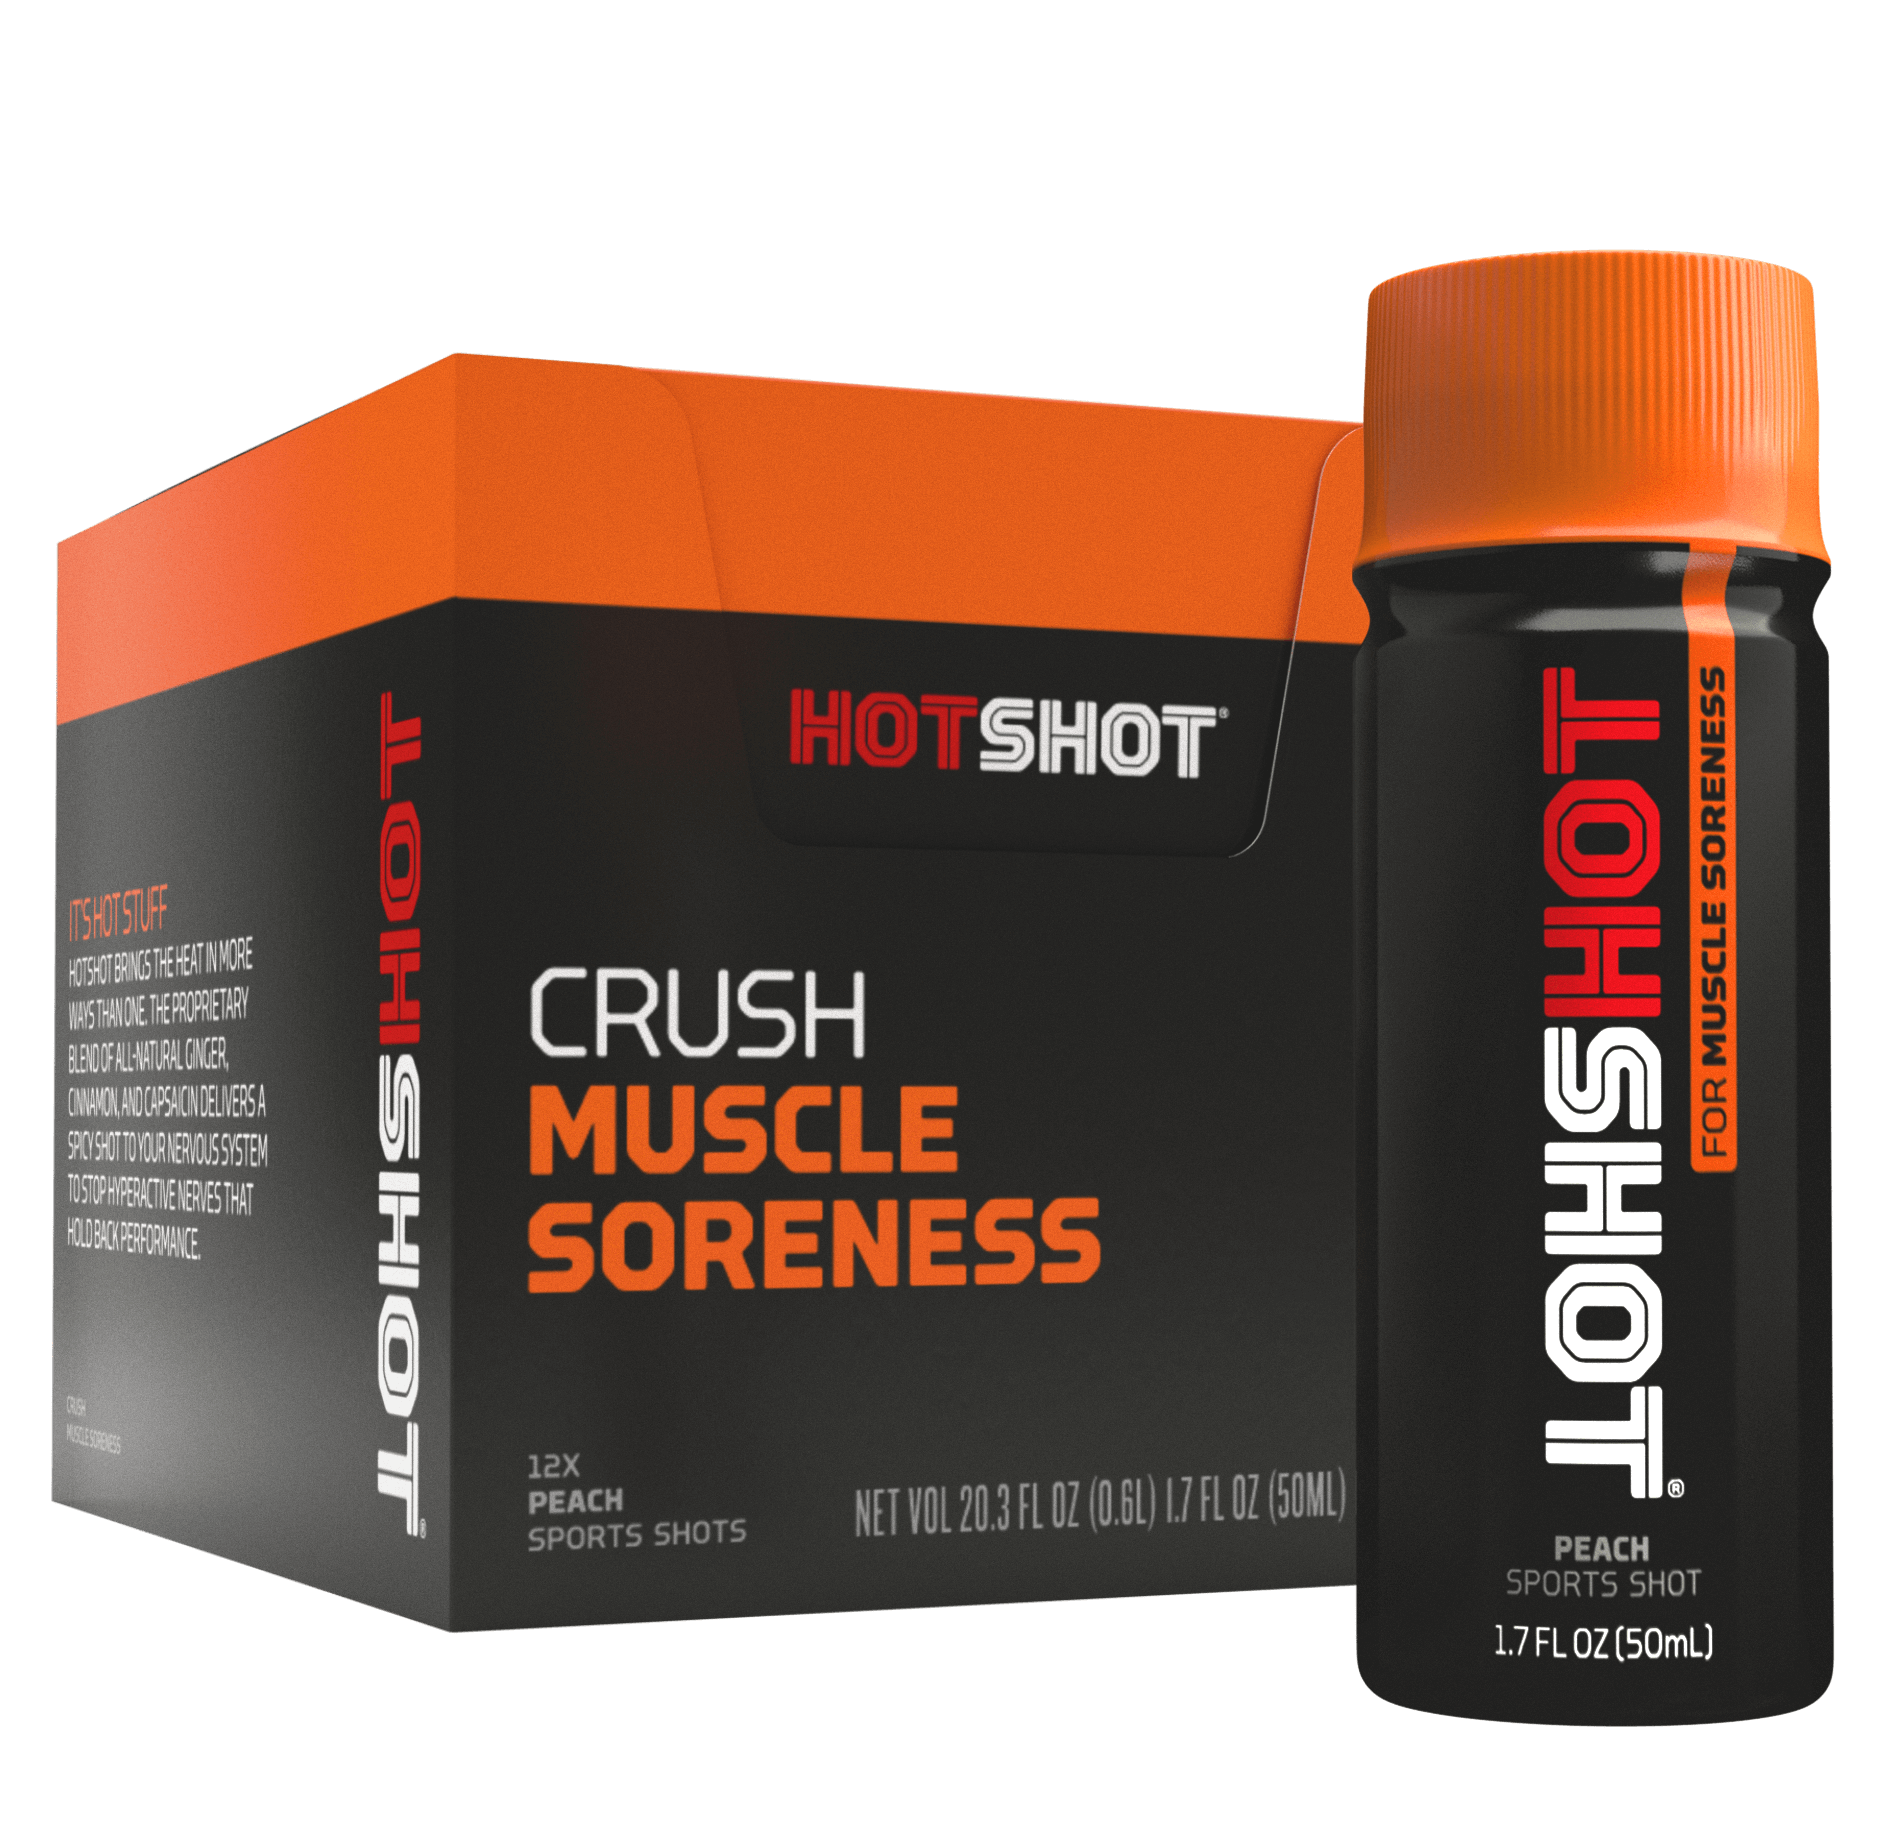 Box of Stop Muscle Soreness Shots and Bottle of HotShot